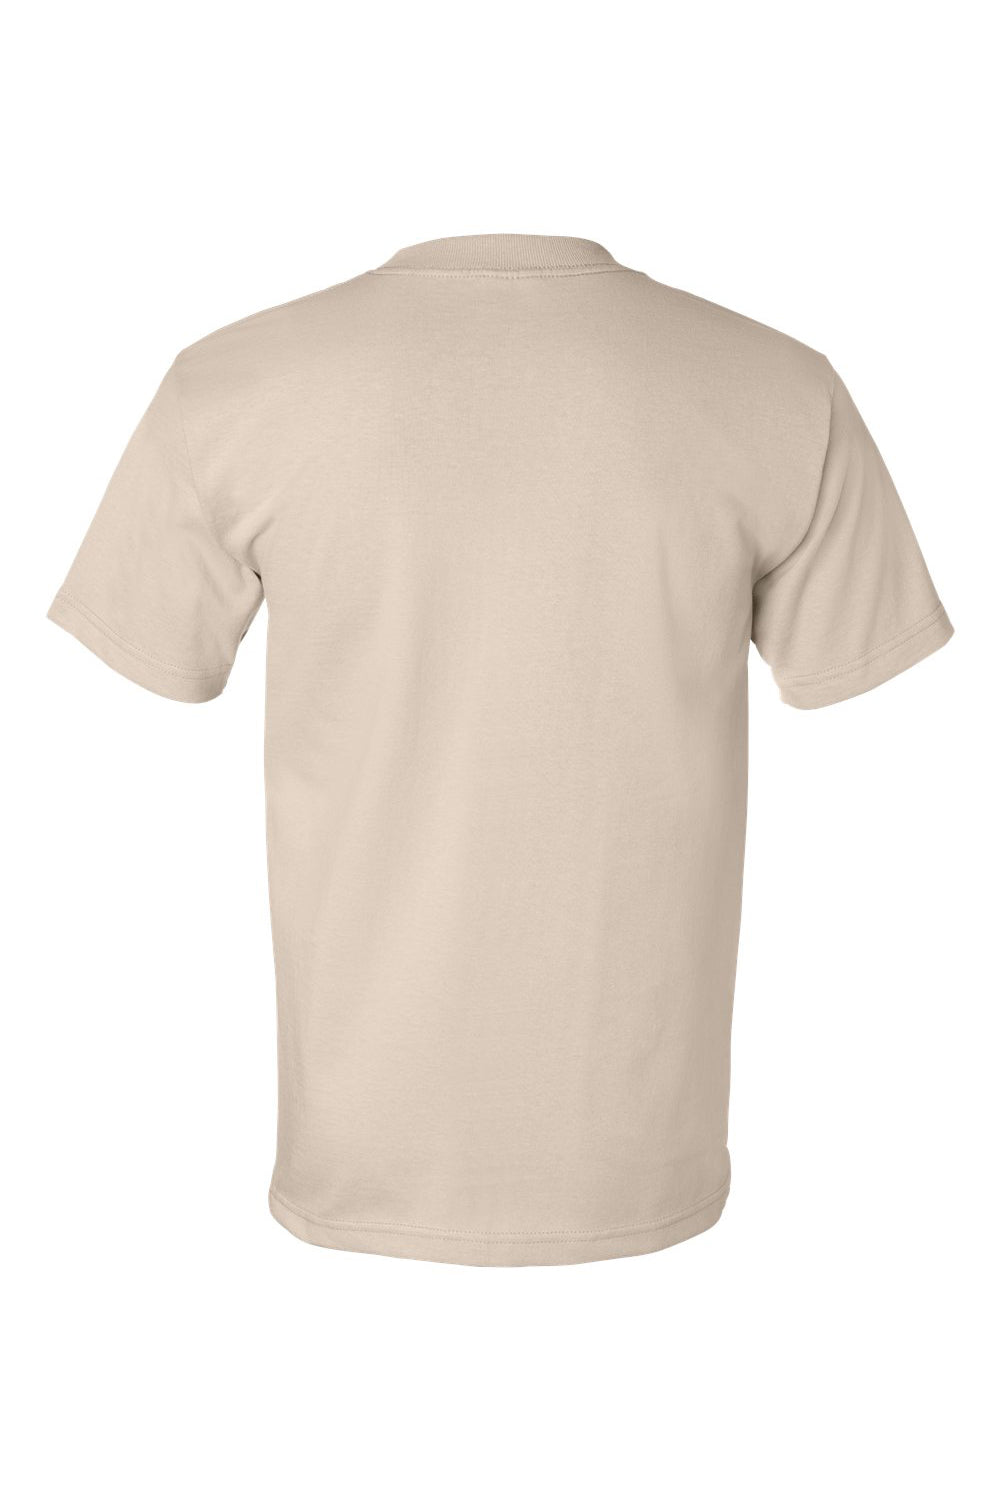 Bayside BA5100 Mens USA Made Short Sleeve Crewneck T-Shirt Sand Flat Back